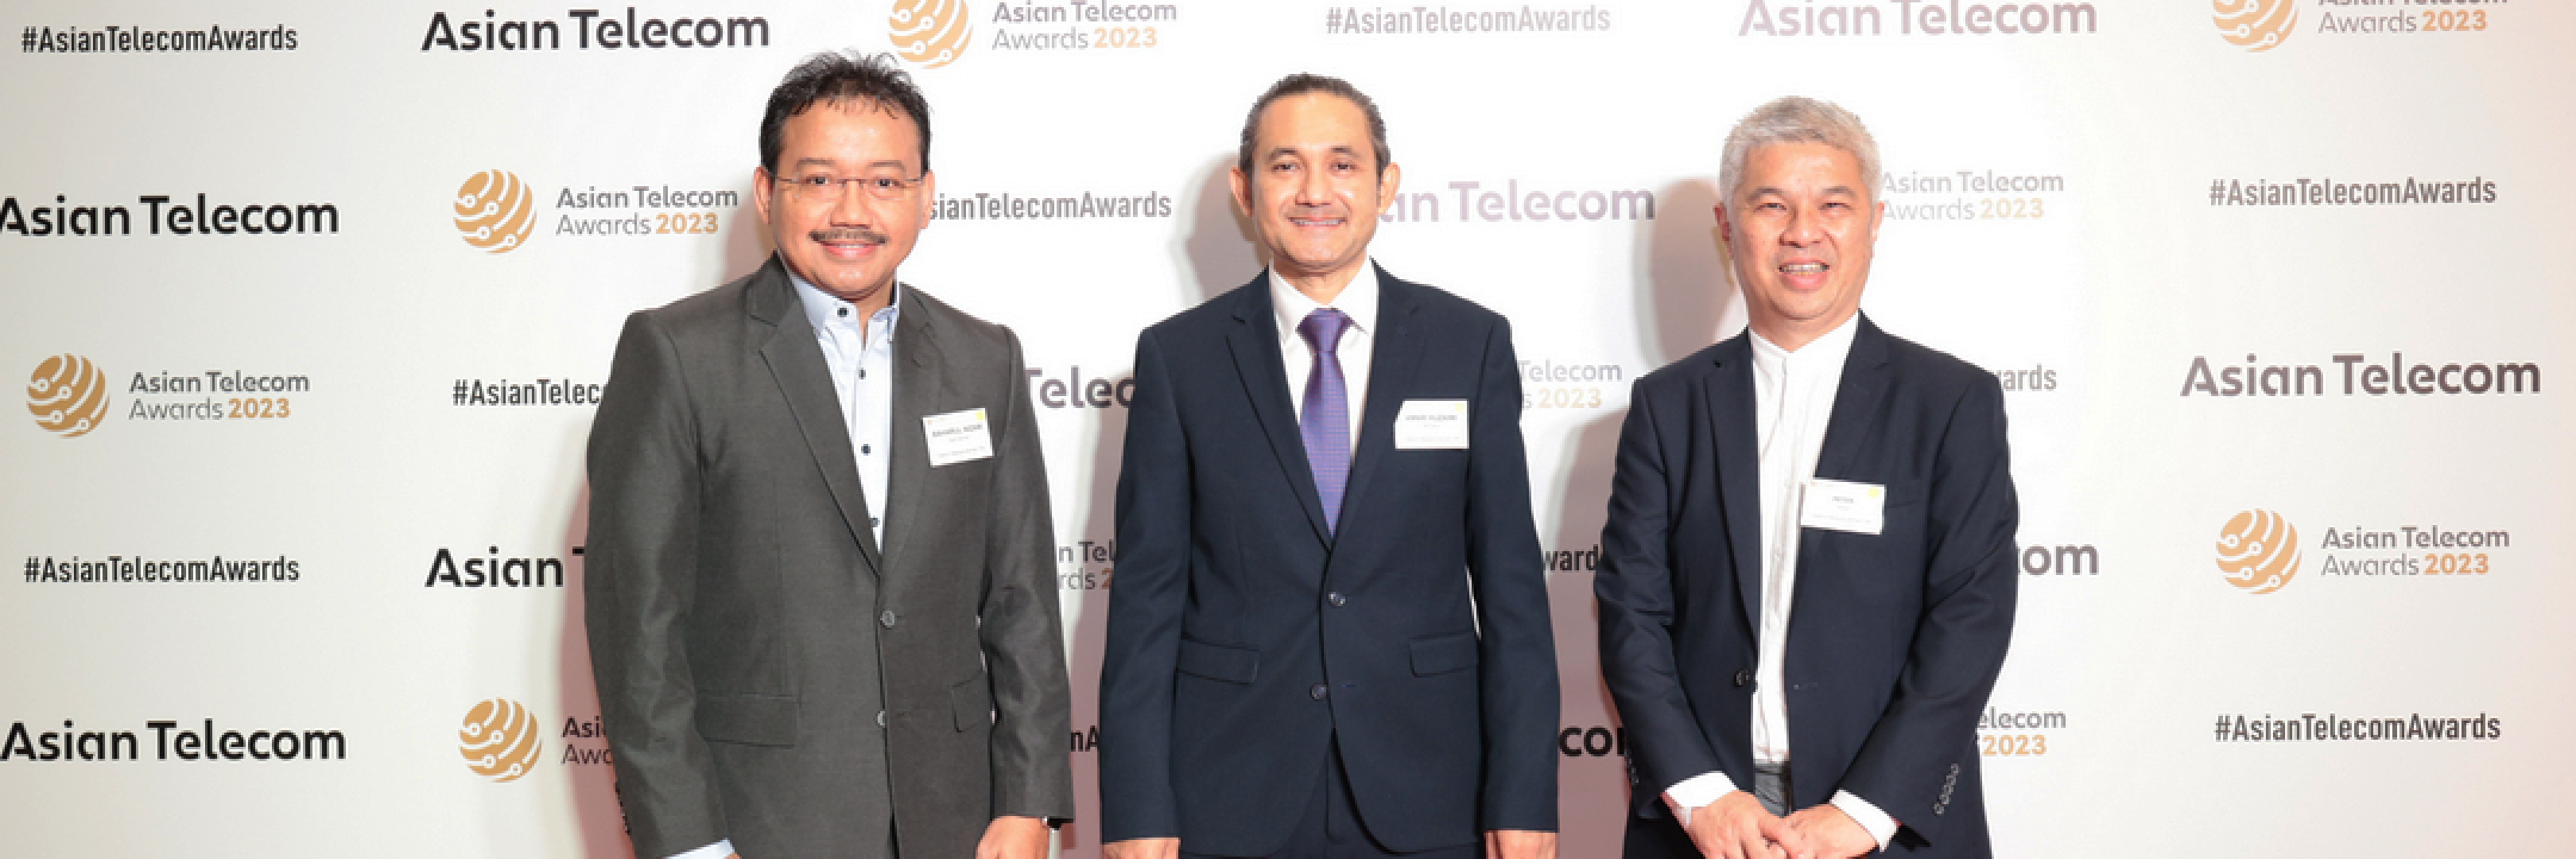 Asian-Telecom-Awards 7